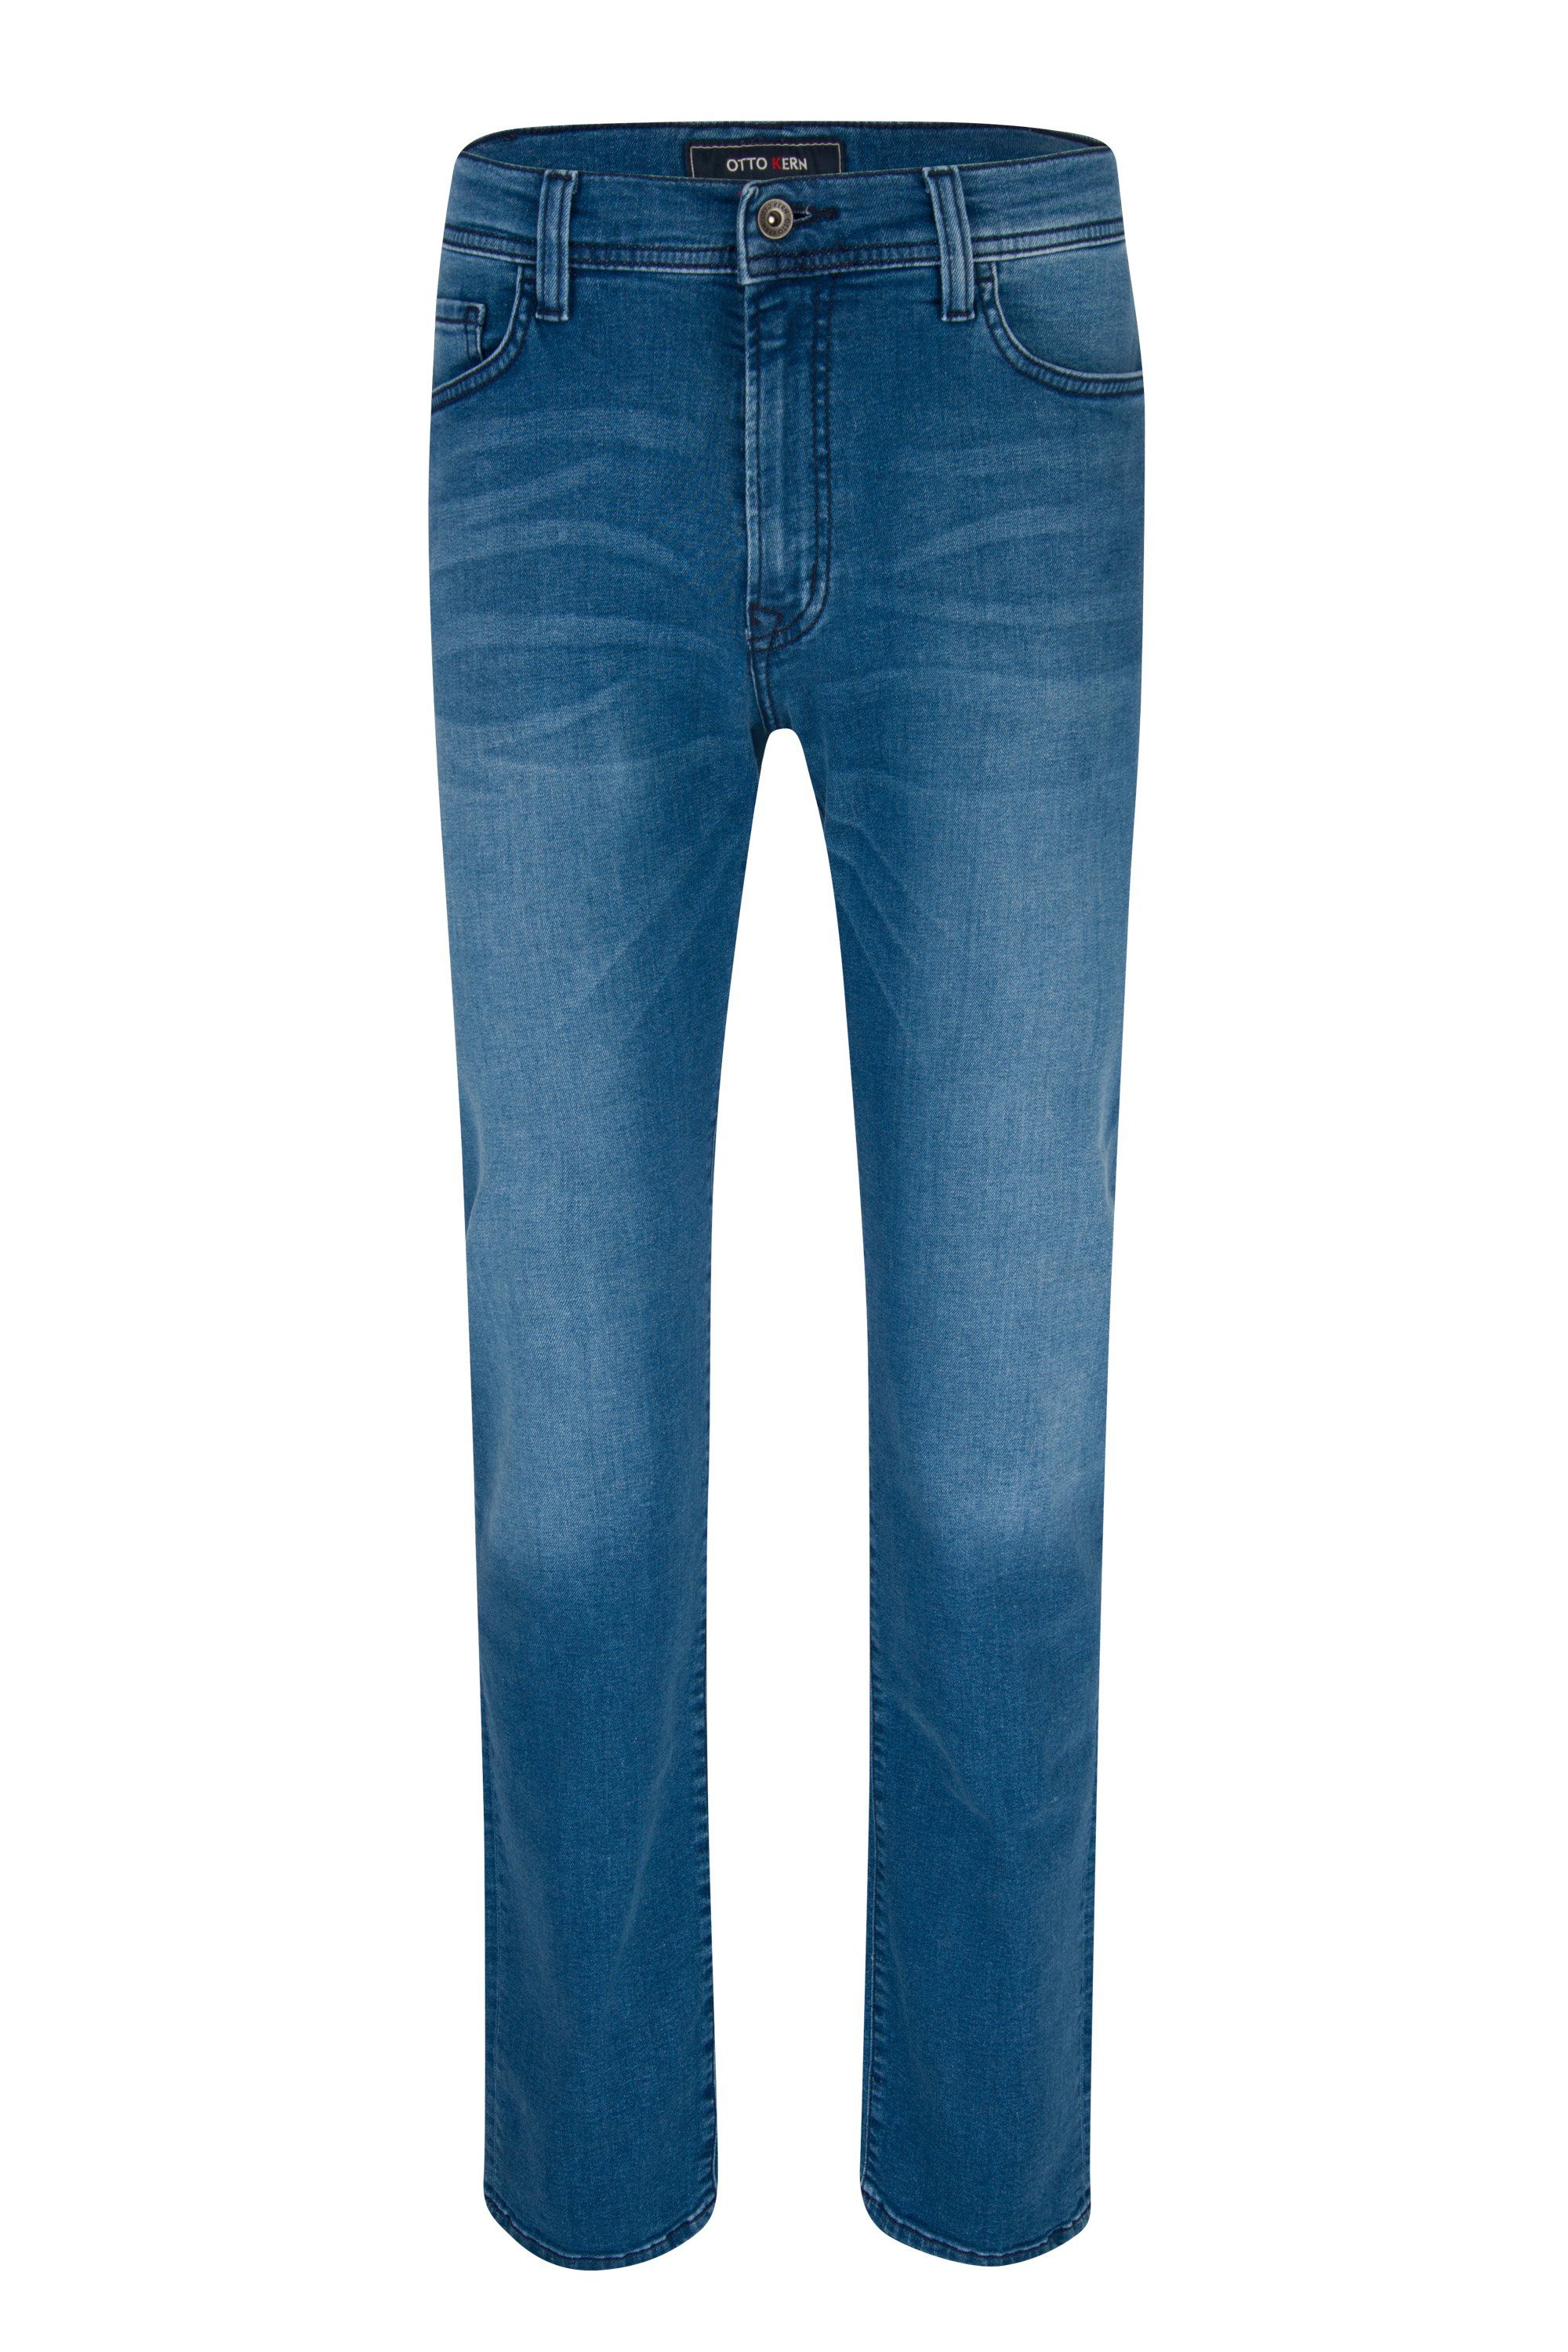  Kern 5-Pocket-Jeans OTTO KERN JOHN mid blue used wash 67041 6816.6824 - Dynamic Pure Stret